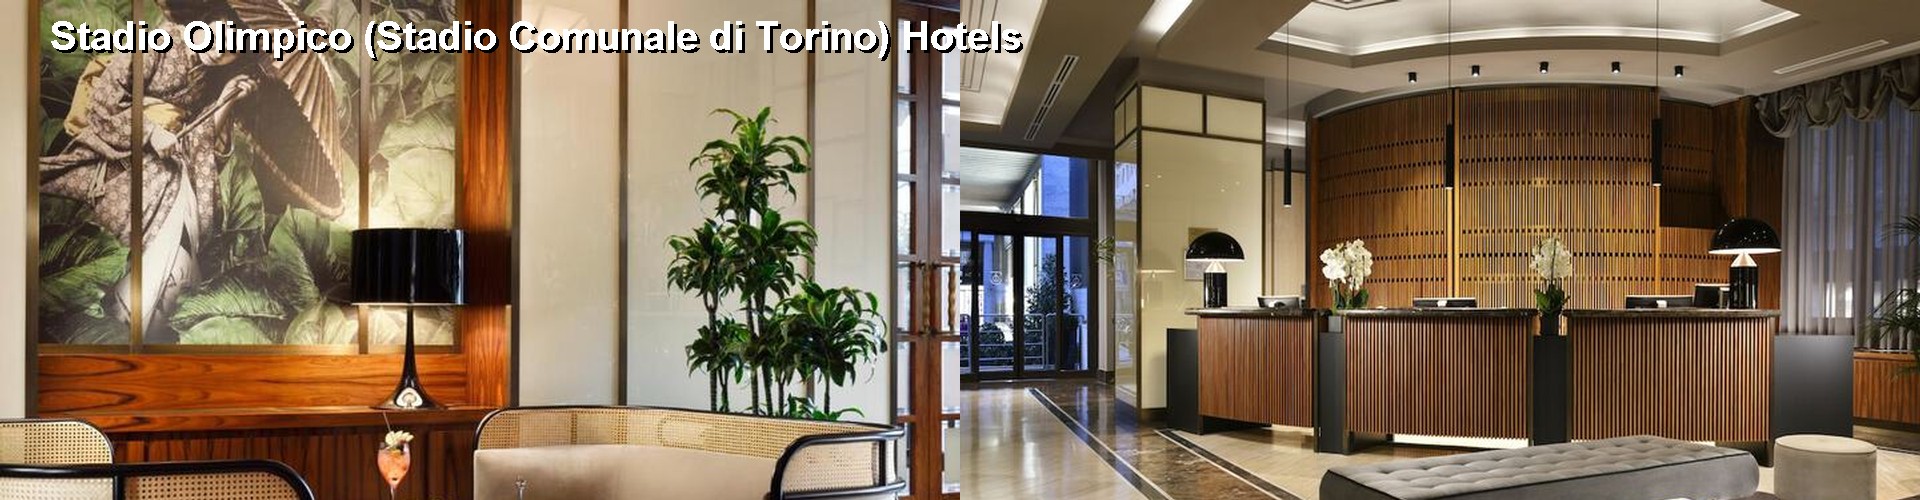 5 Best Hotels near Stadio Olimpico (Stadio Comunale di Torino)